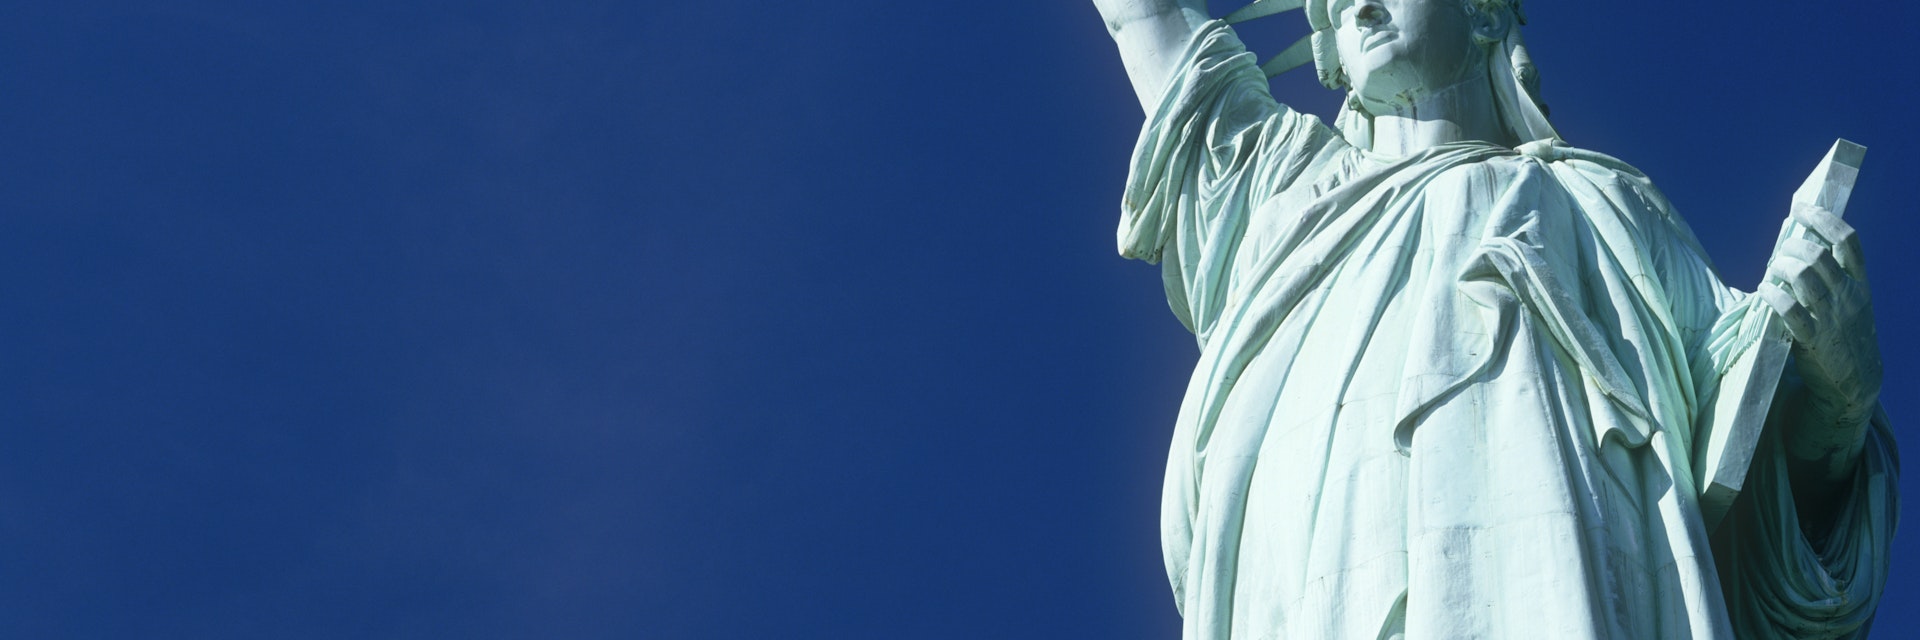 Statue of Liberty, Financial District & Lower Manhattan, New York City